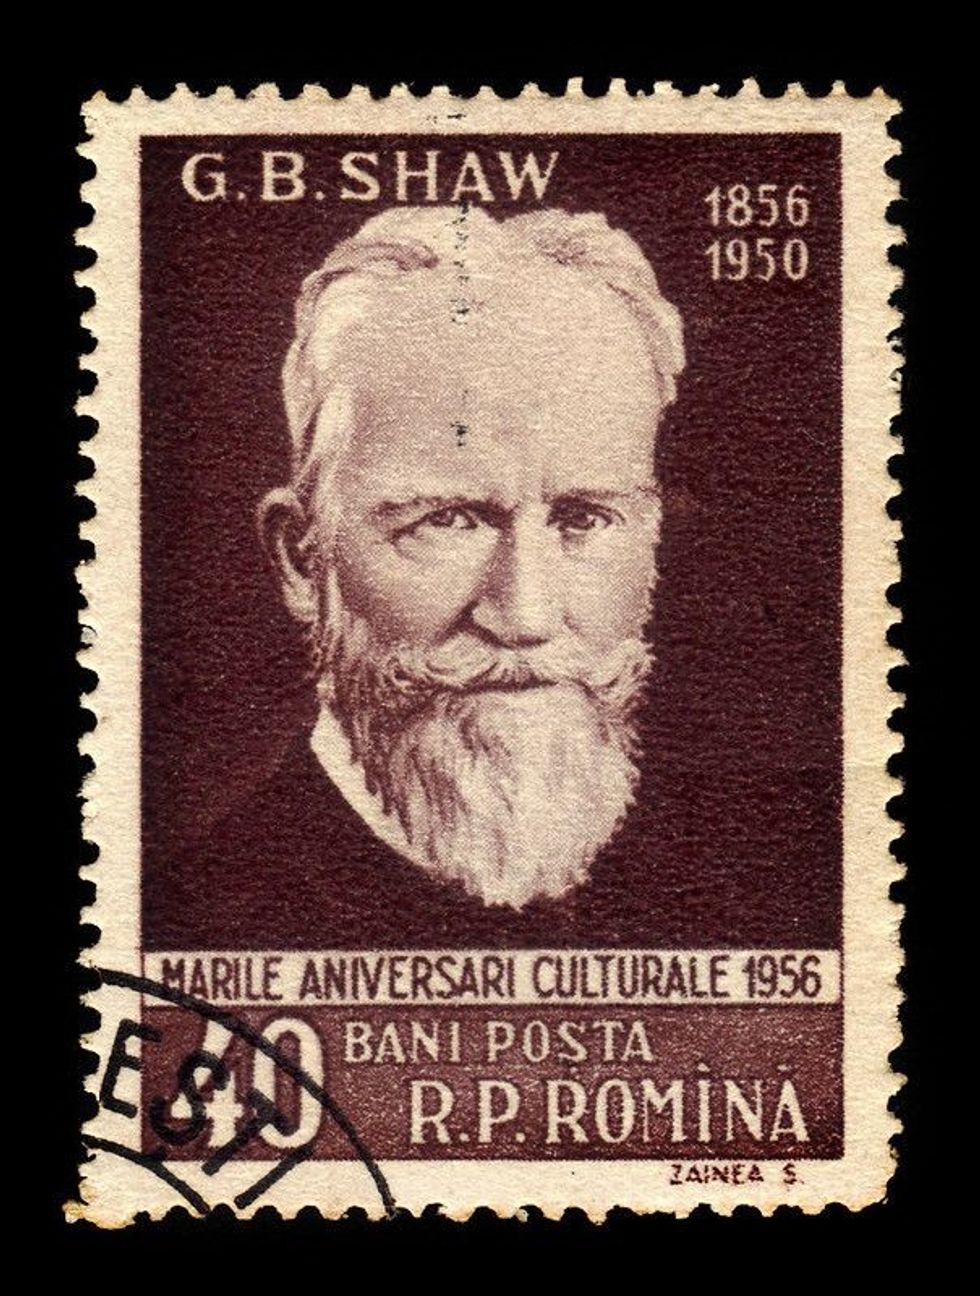 A stamp printed in Romania shows George Bernard Shaw (1856-1950) irish writer and playwright, circa 1956